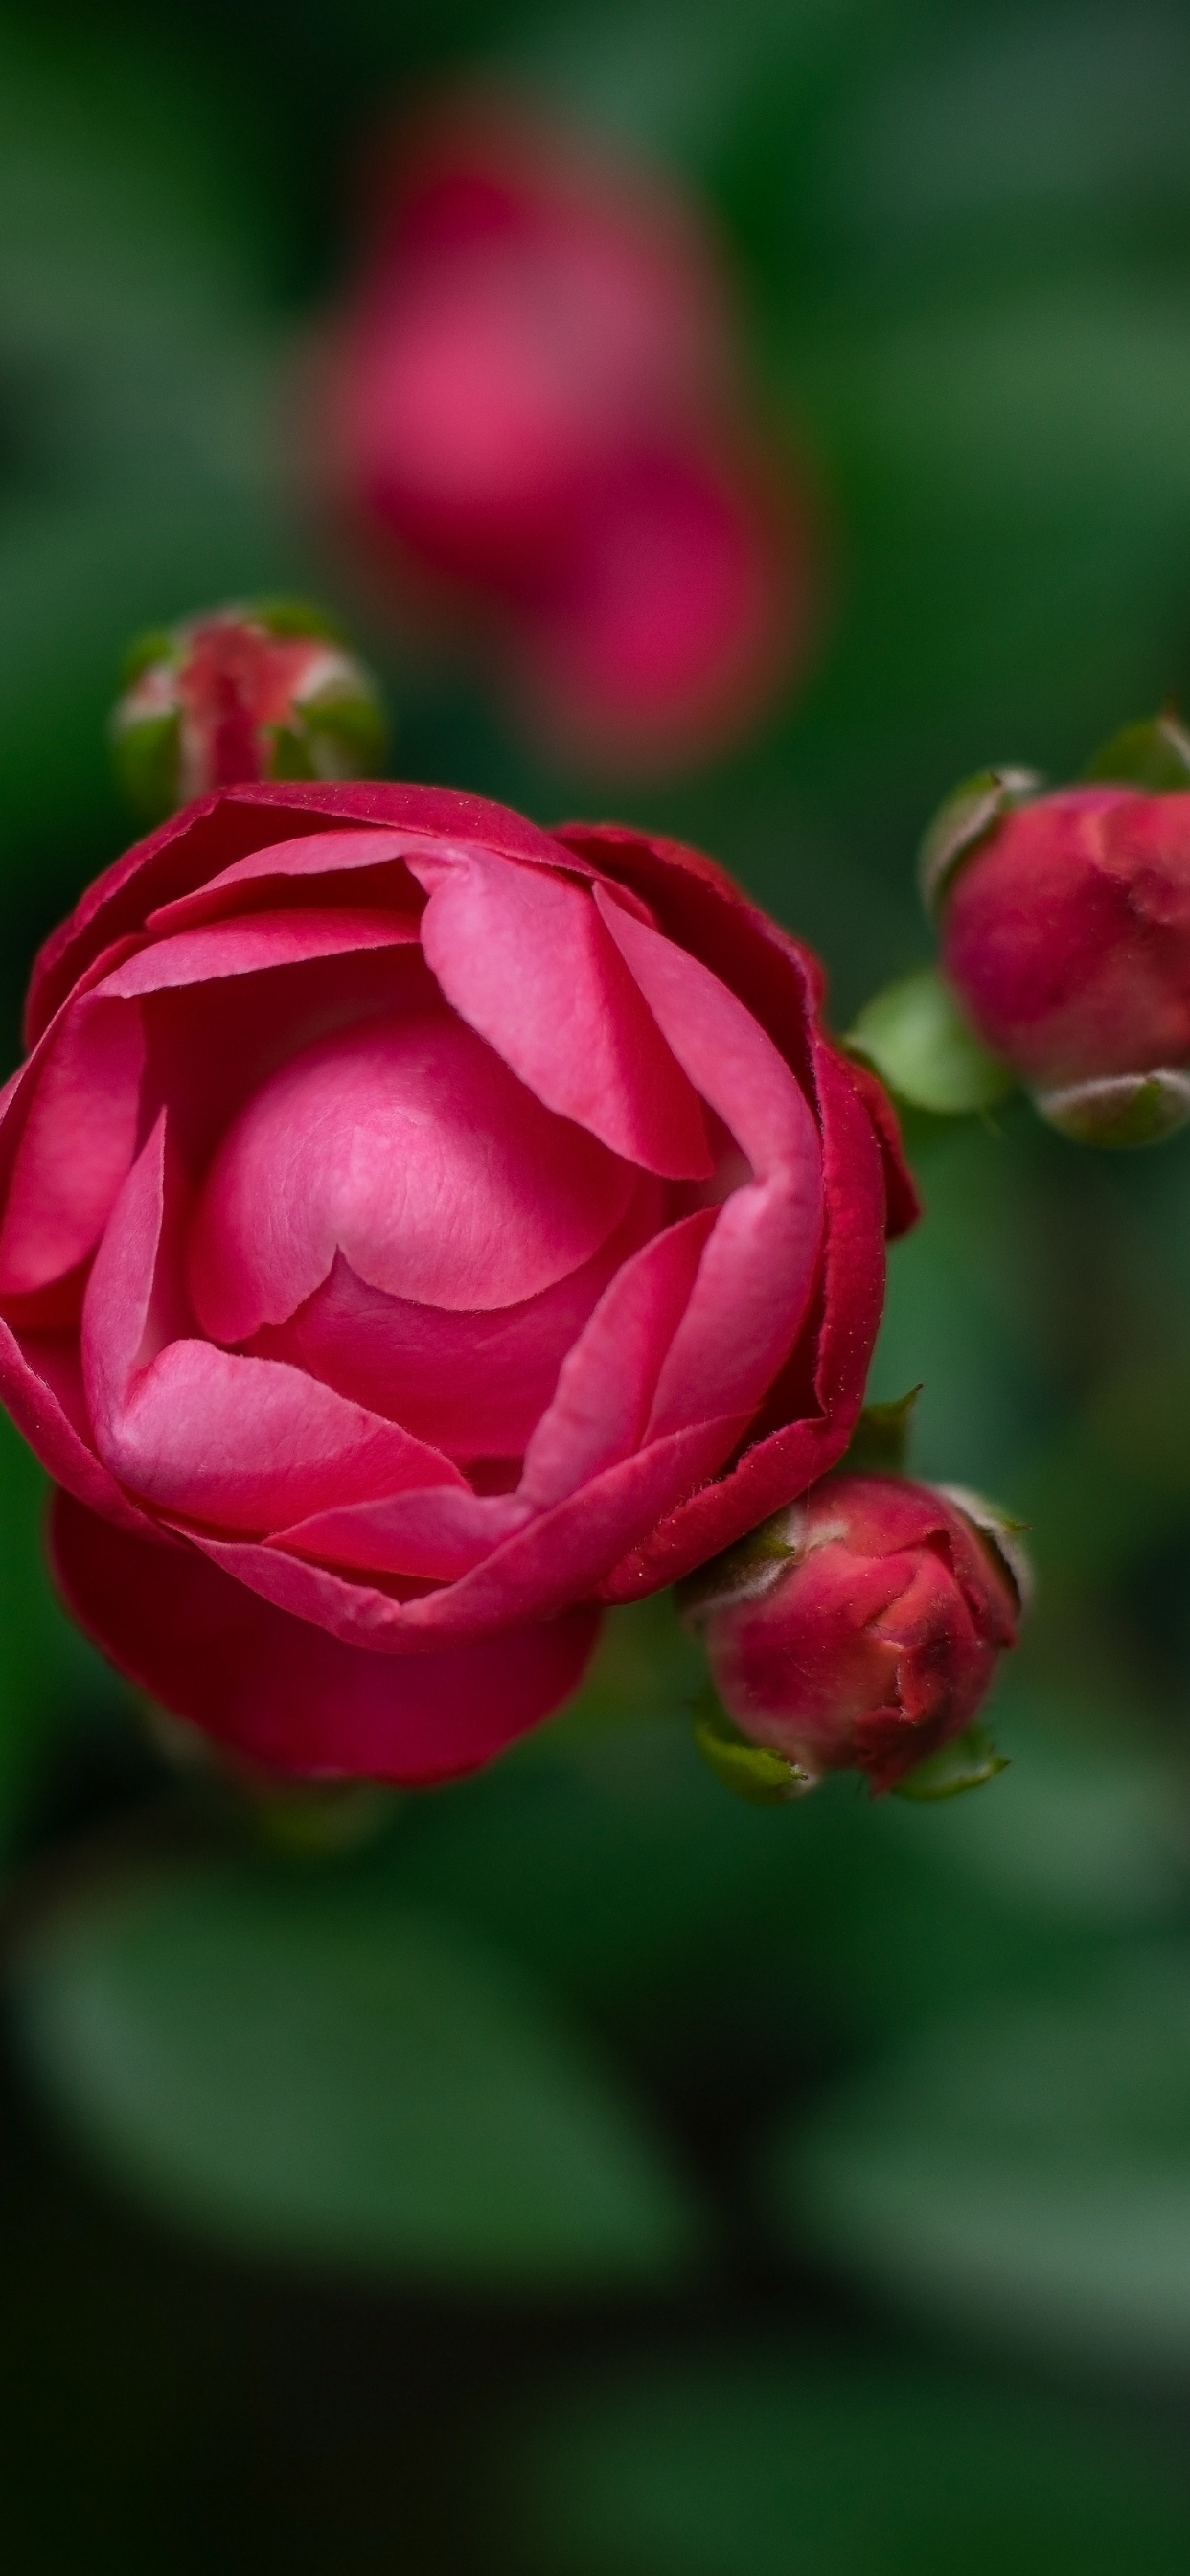 Rose Rose en Fleurs Pendant la Journée. Wallpaper in 1242x2688 Resolution